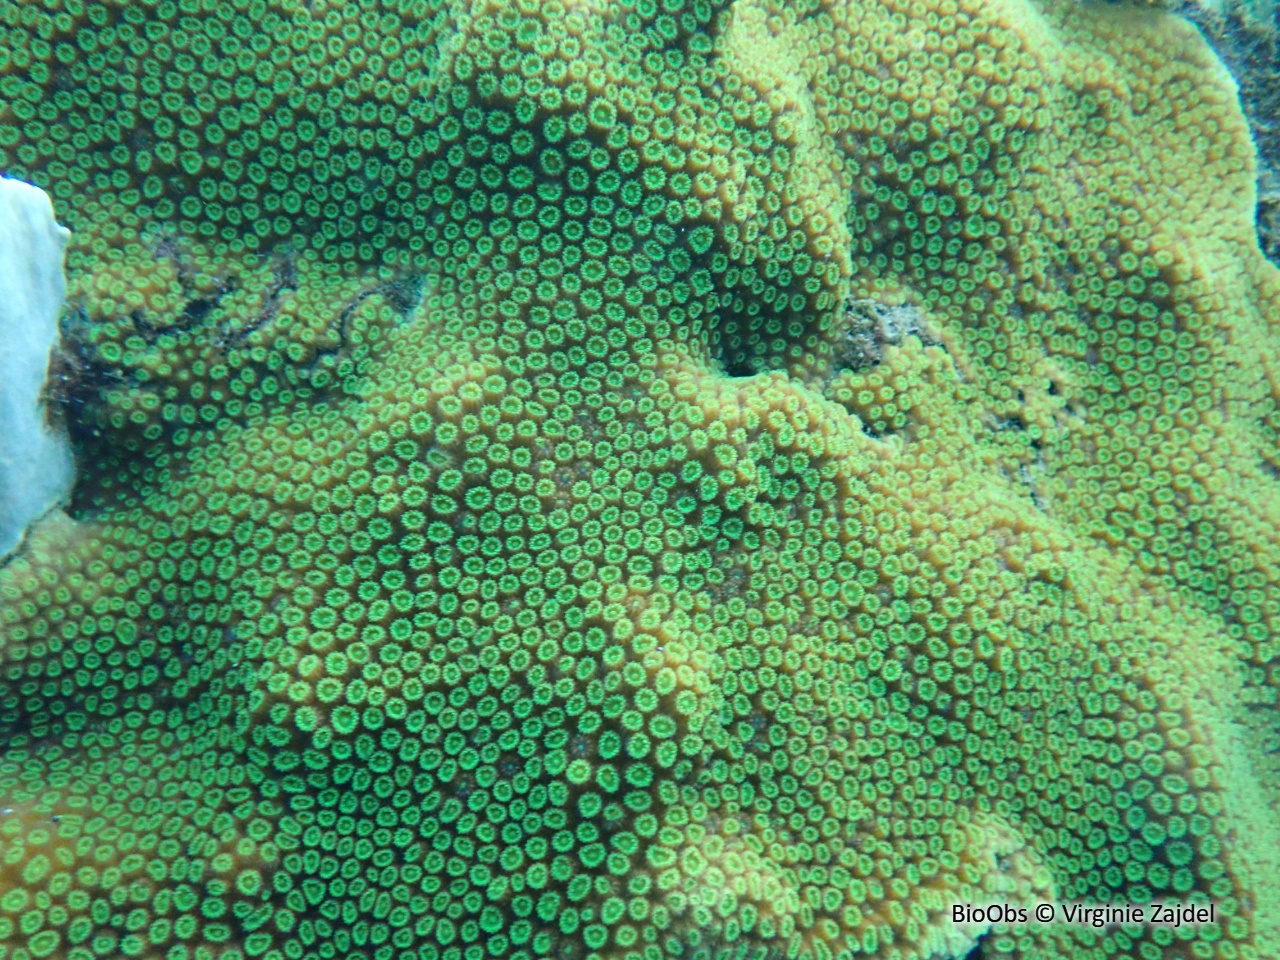 Corail étoilé massif - Orbicella annularis - Virginie Zajdel - BioObs